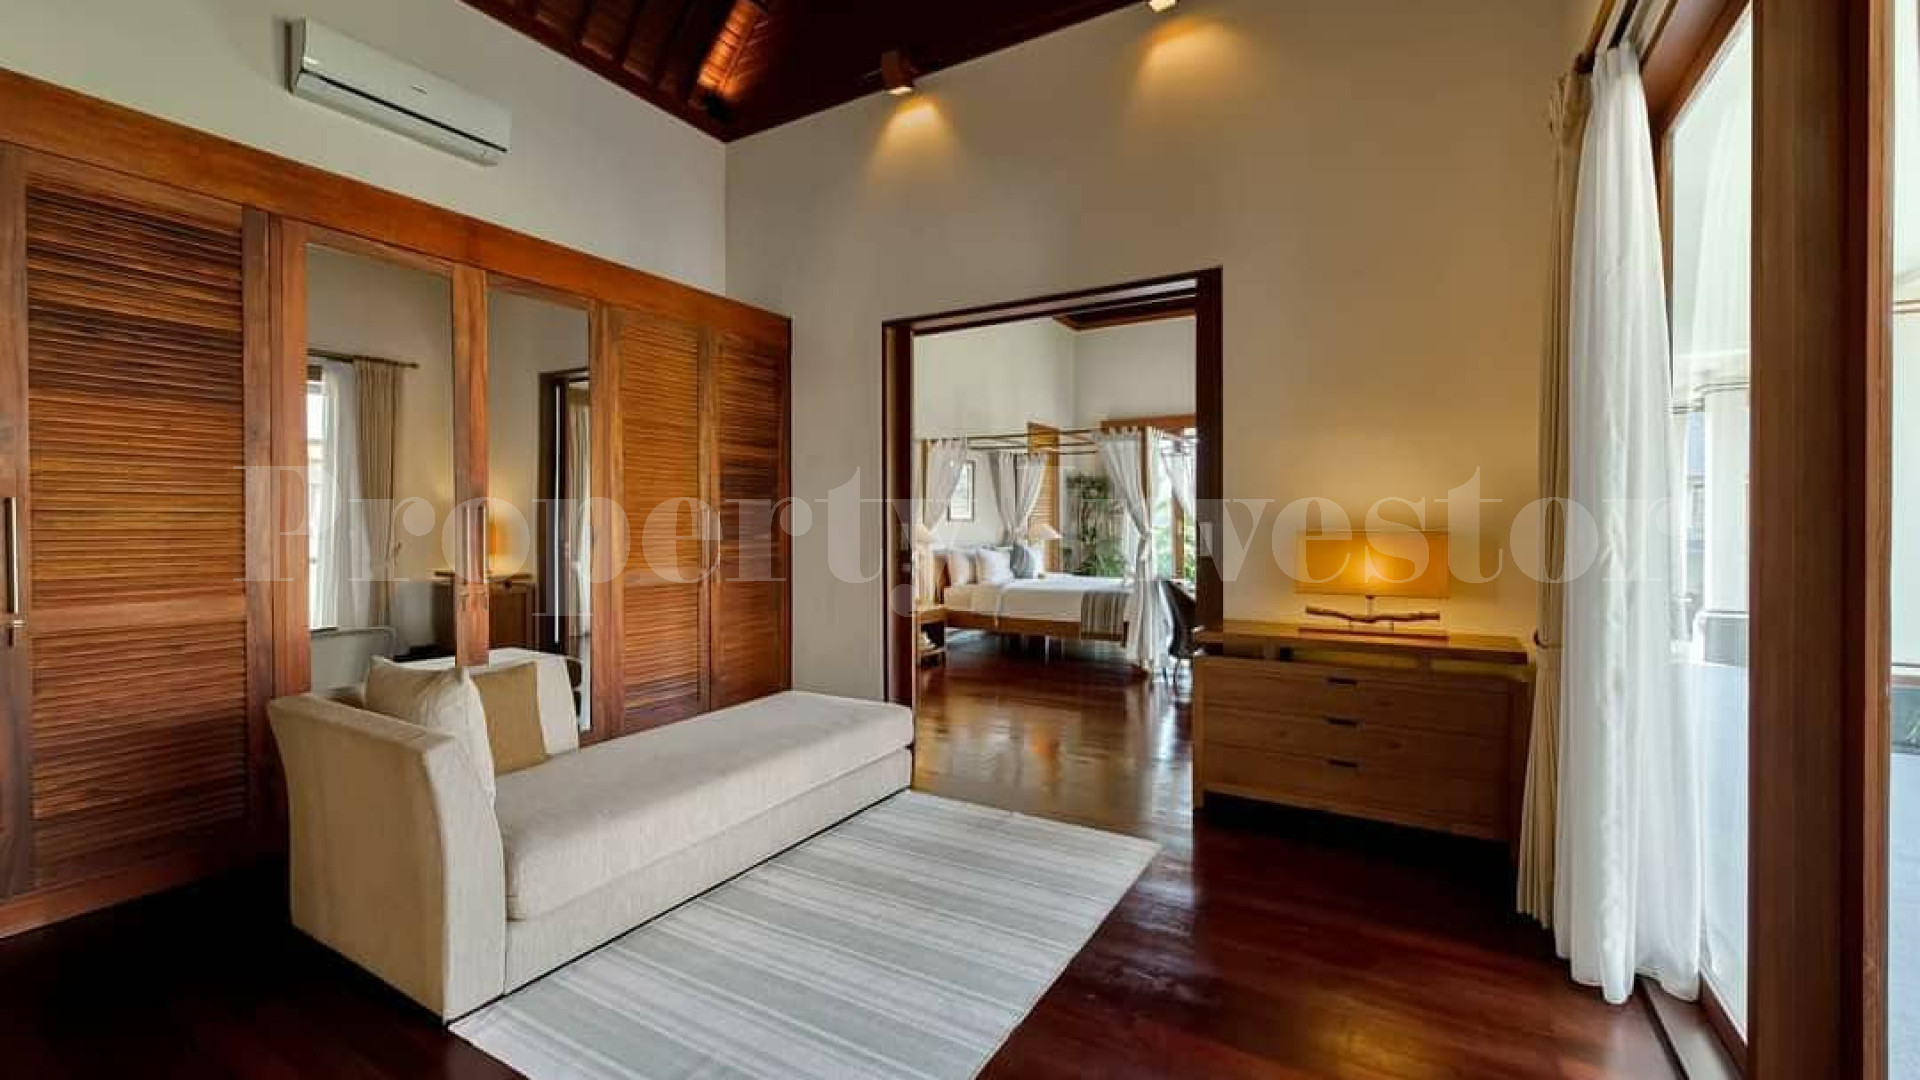 Stunning 4 Bedroom Luxury Mansion for Sale North of Ubud, Bali